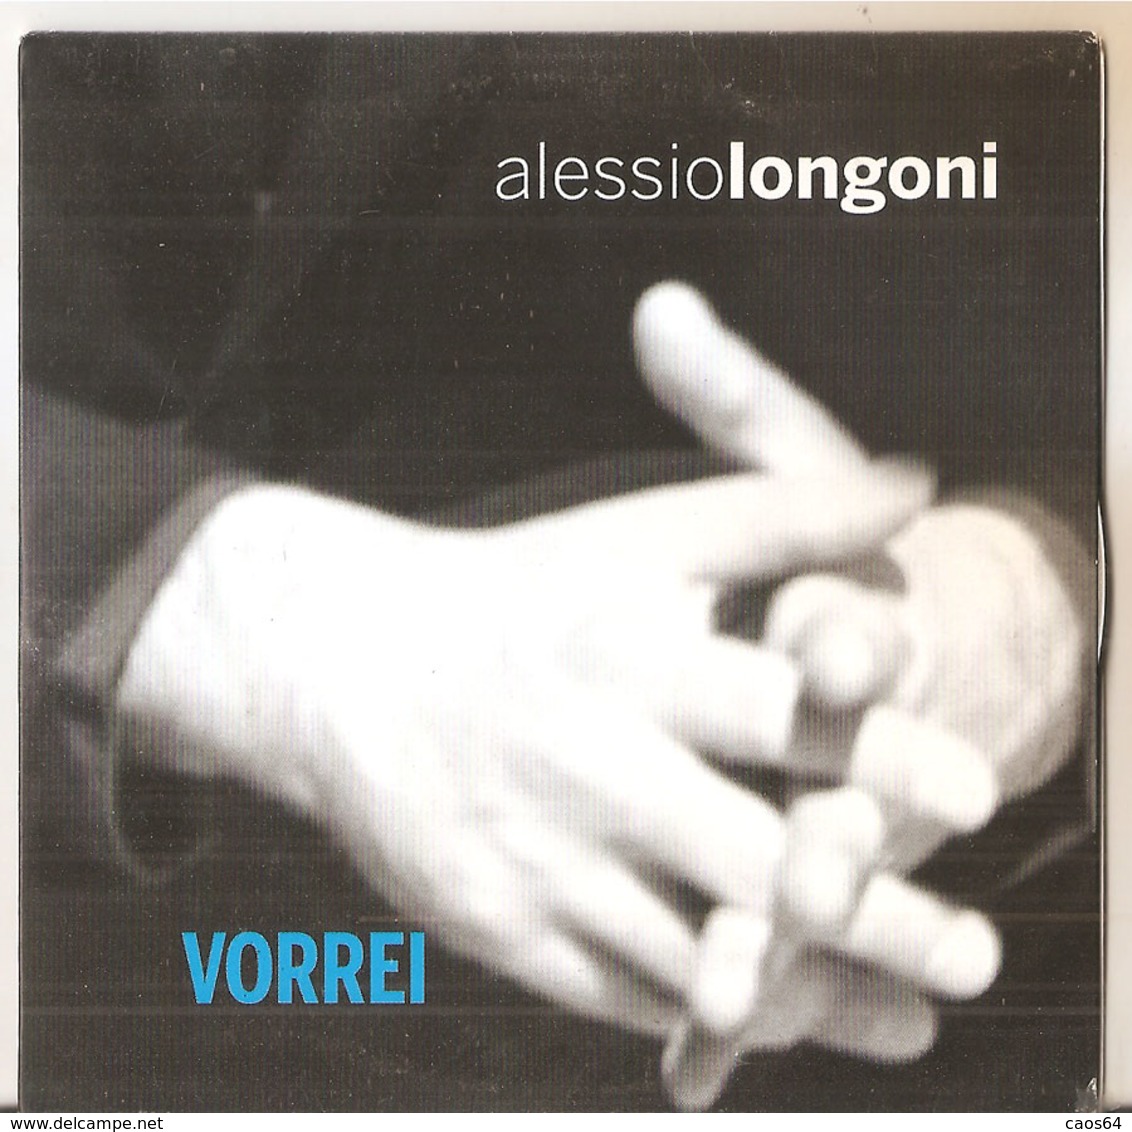 ALESSIO LONGONI VORREI (PROMO) CD - Other - Italian Music